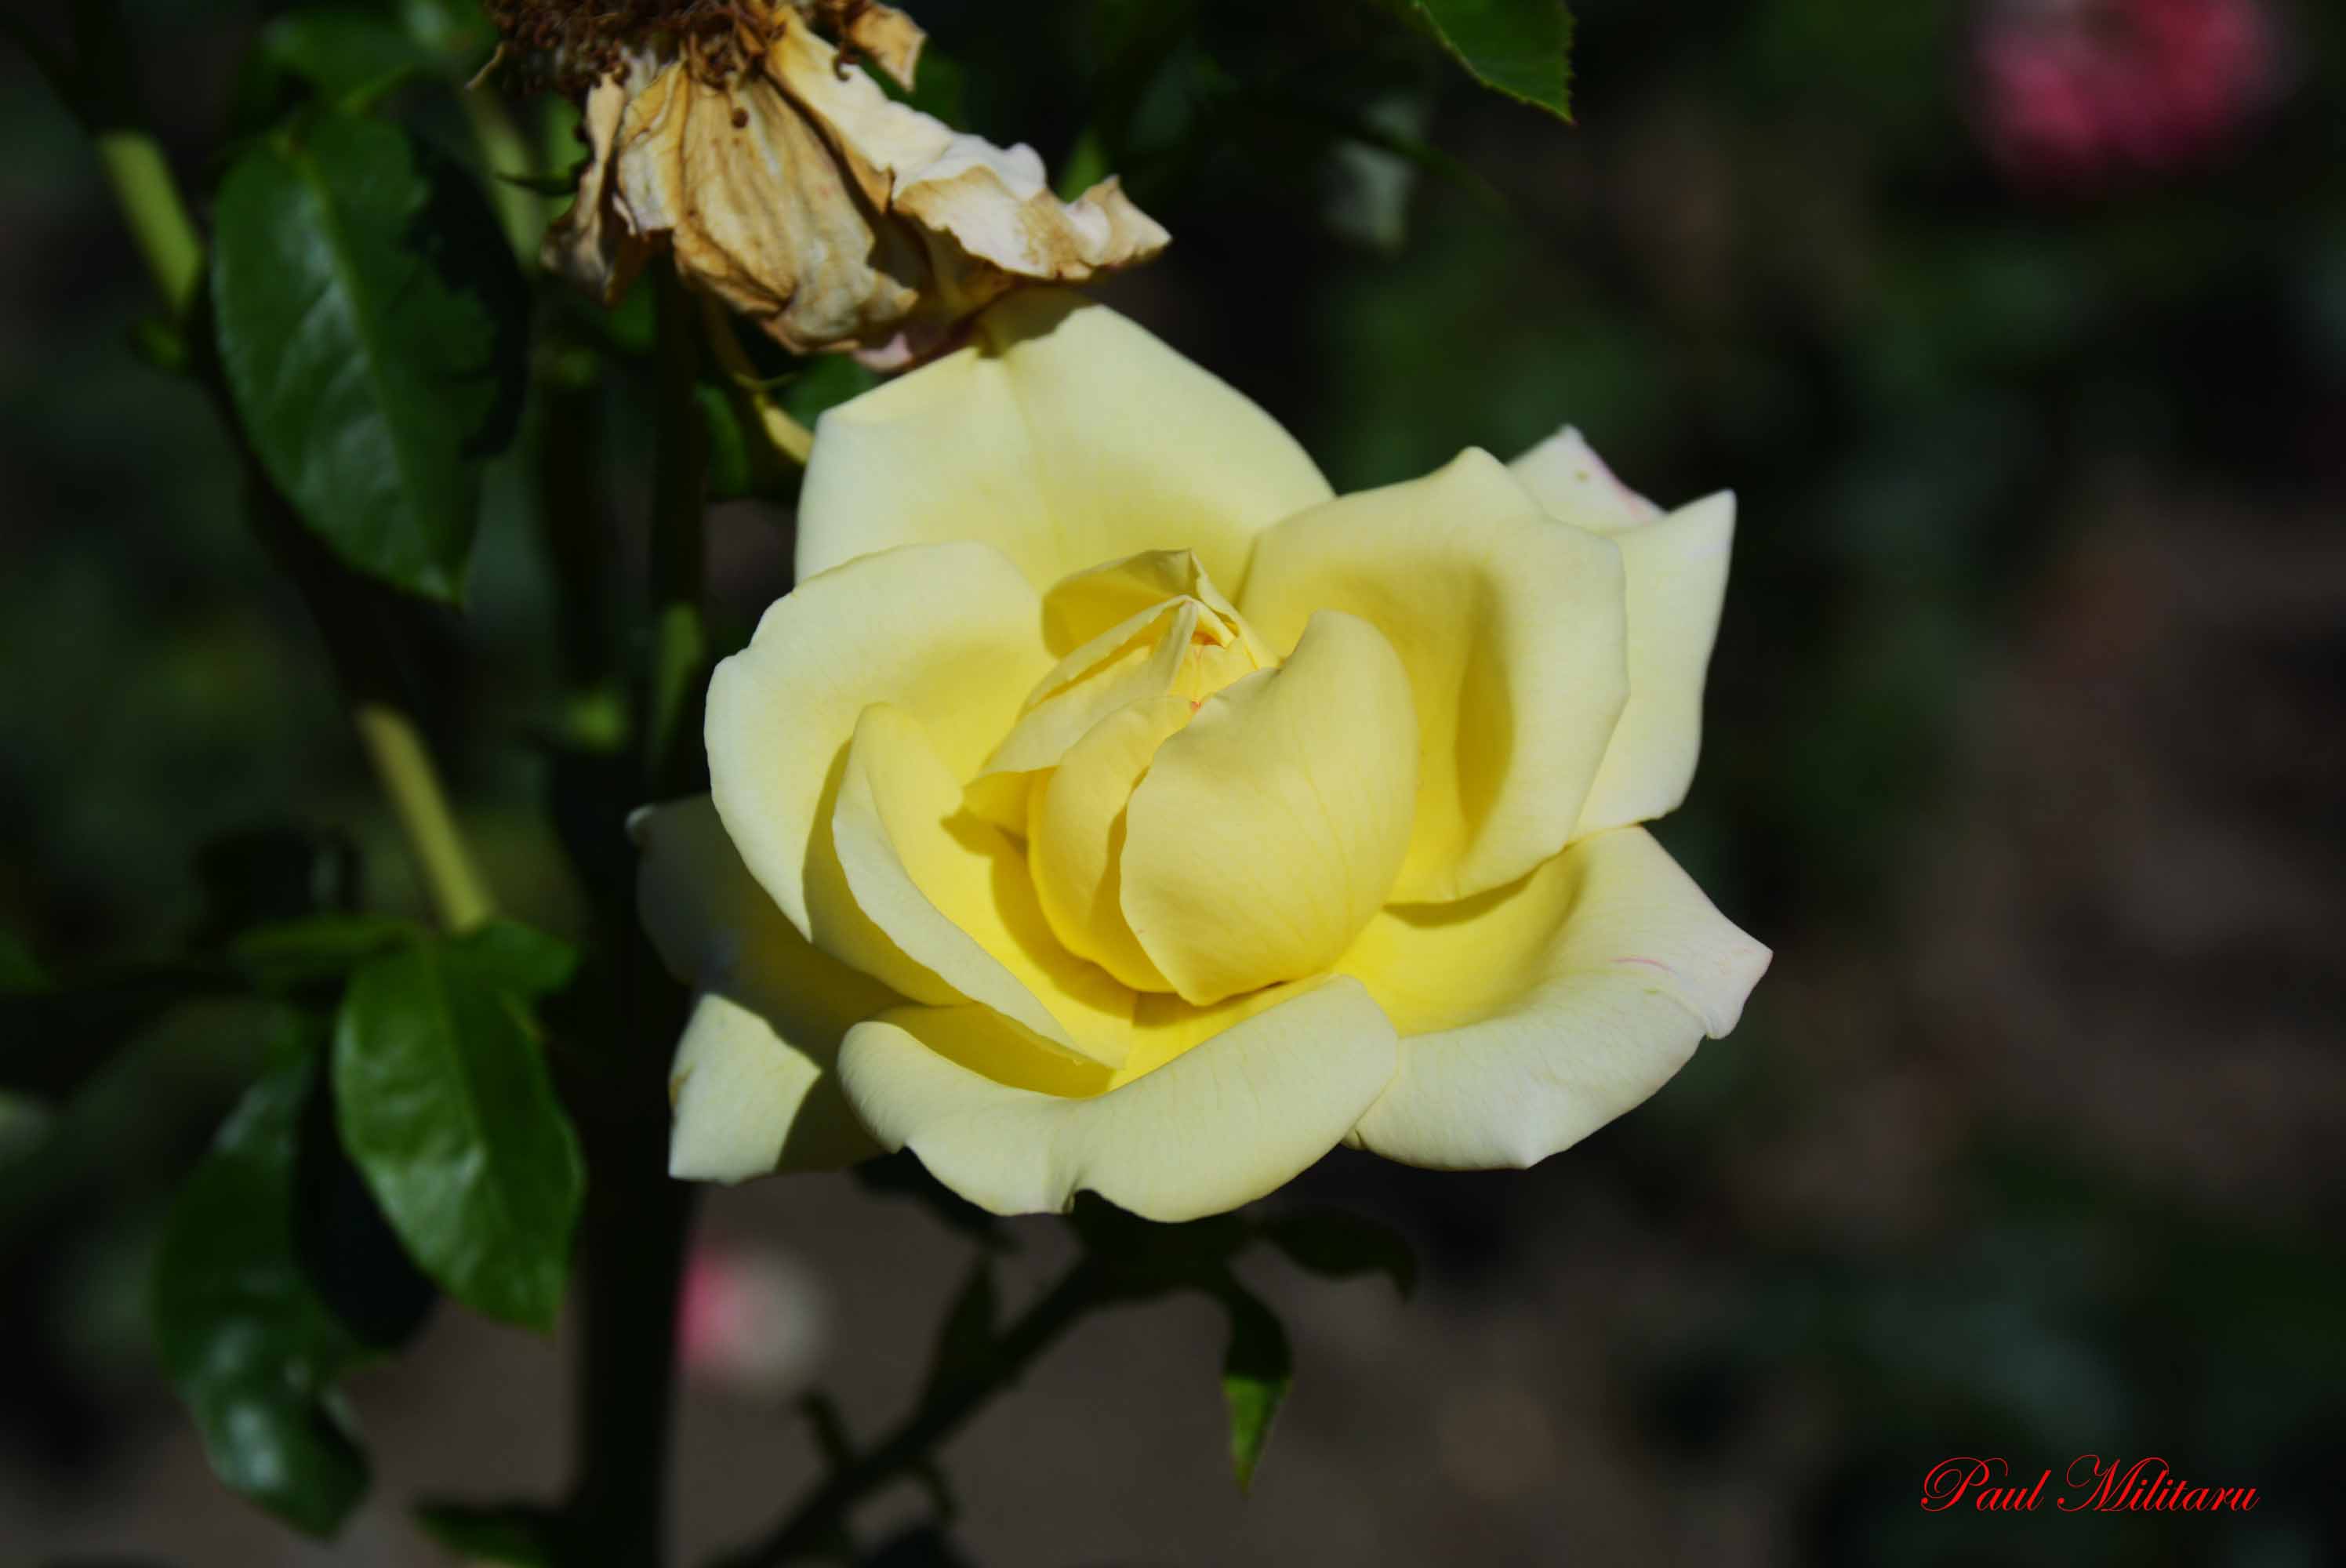 fresh rose near … dry rose | Paul Militaru